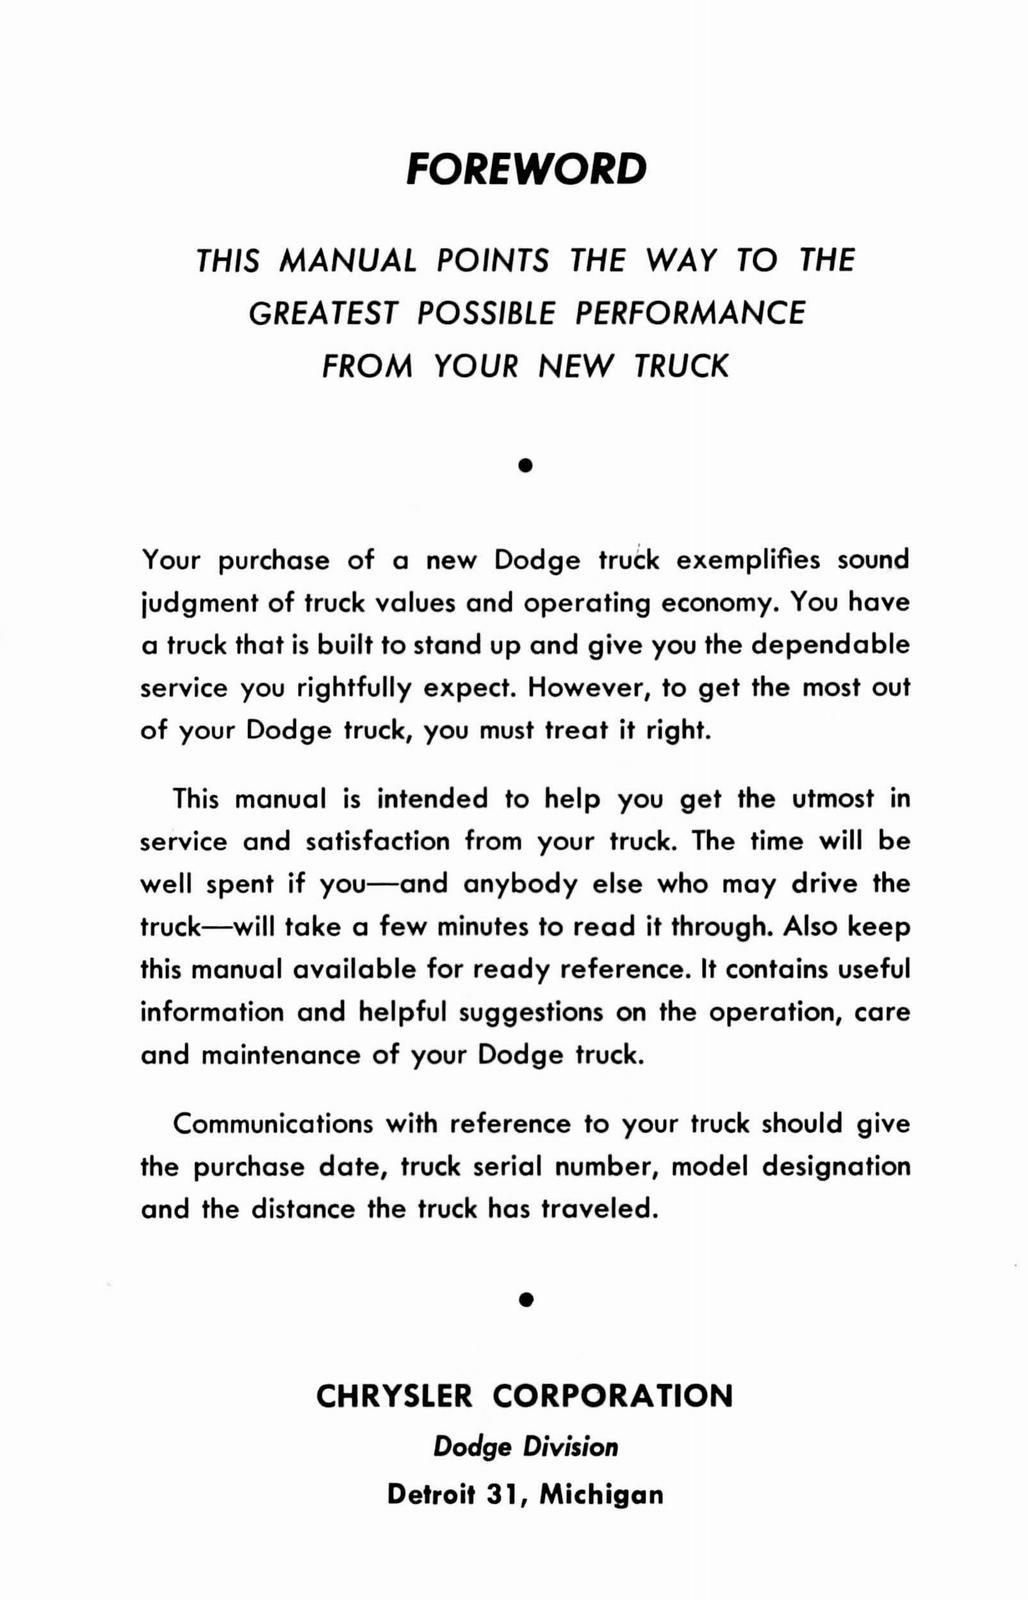 n_1949 Dodge Truck Manual-03.jpg